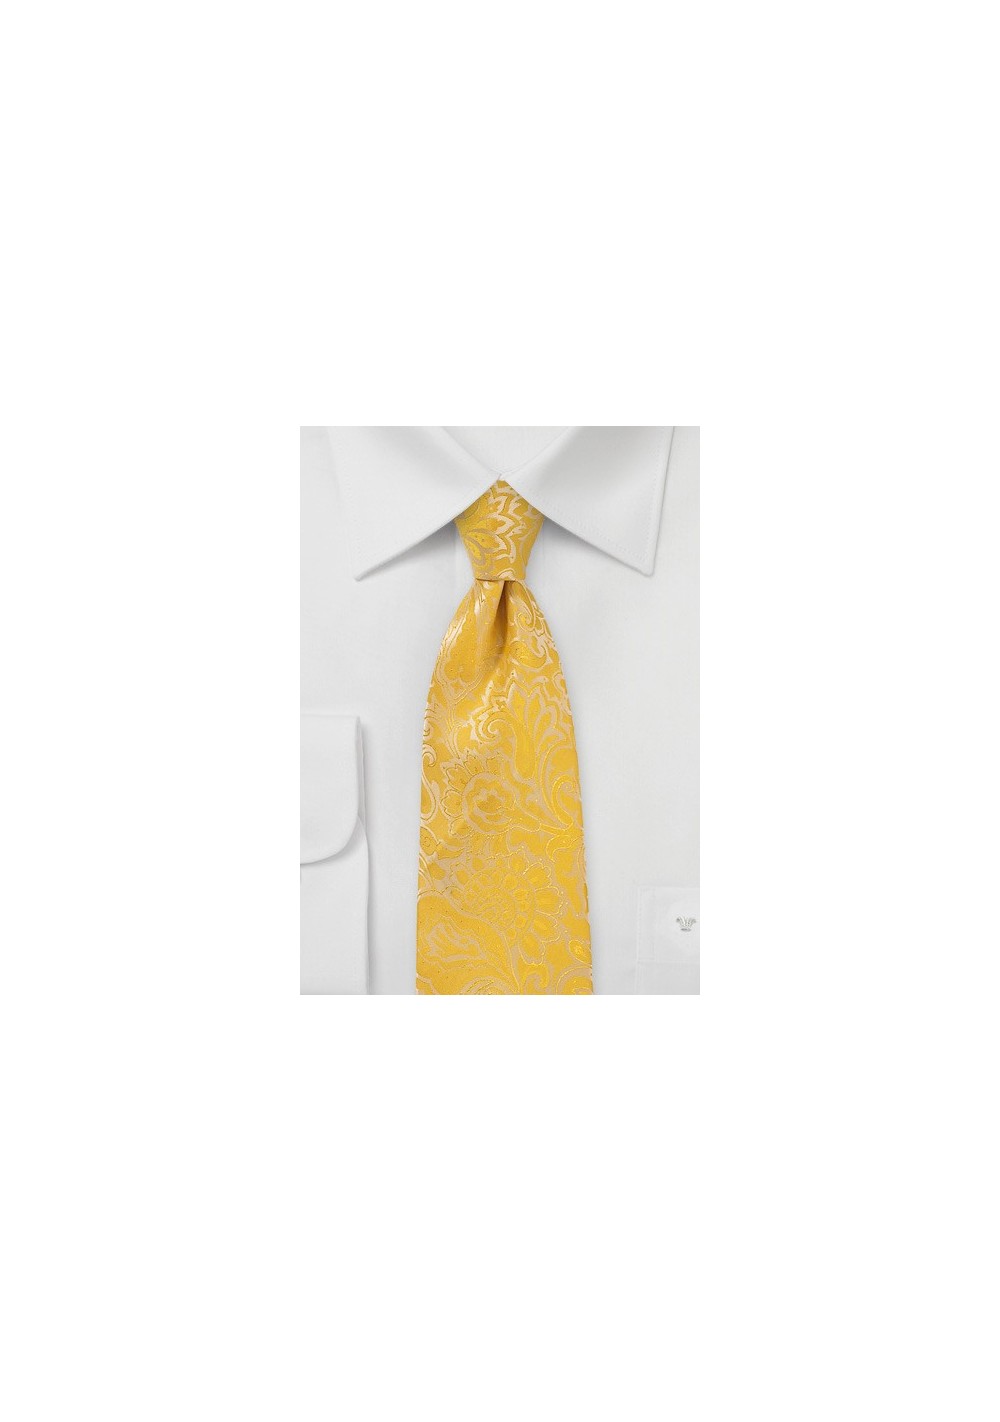 XL Length Paisley Tie in Lemon Yellow